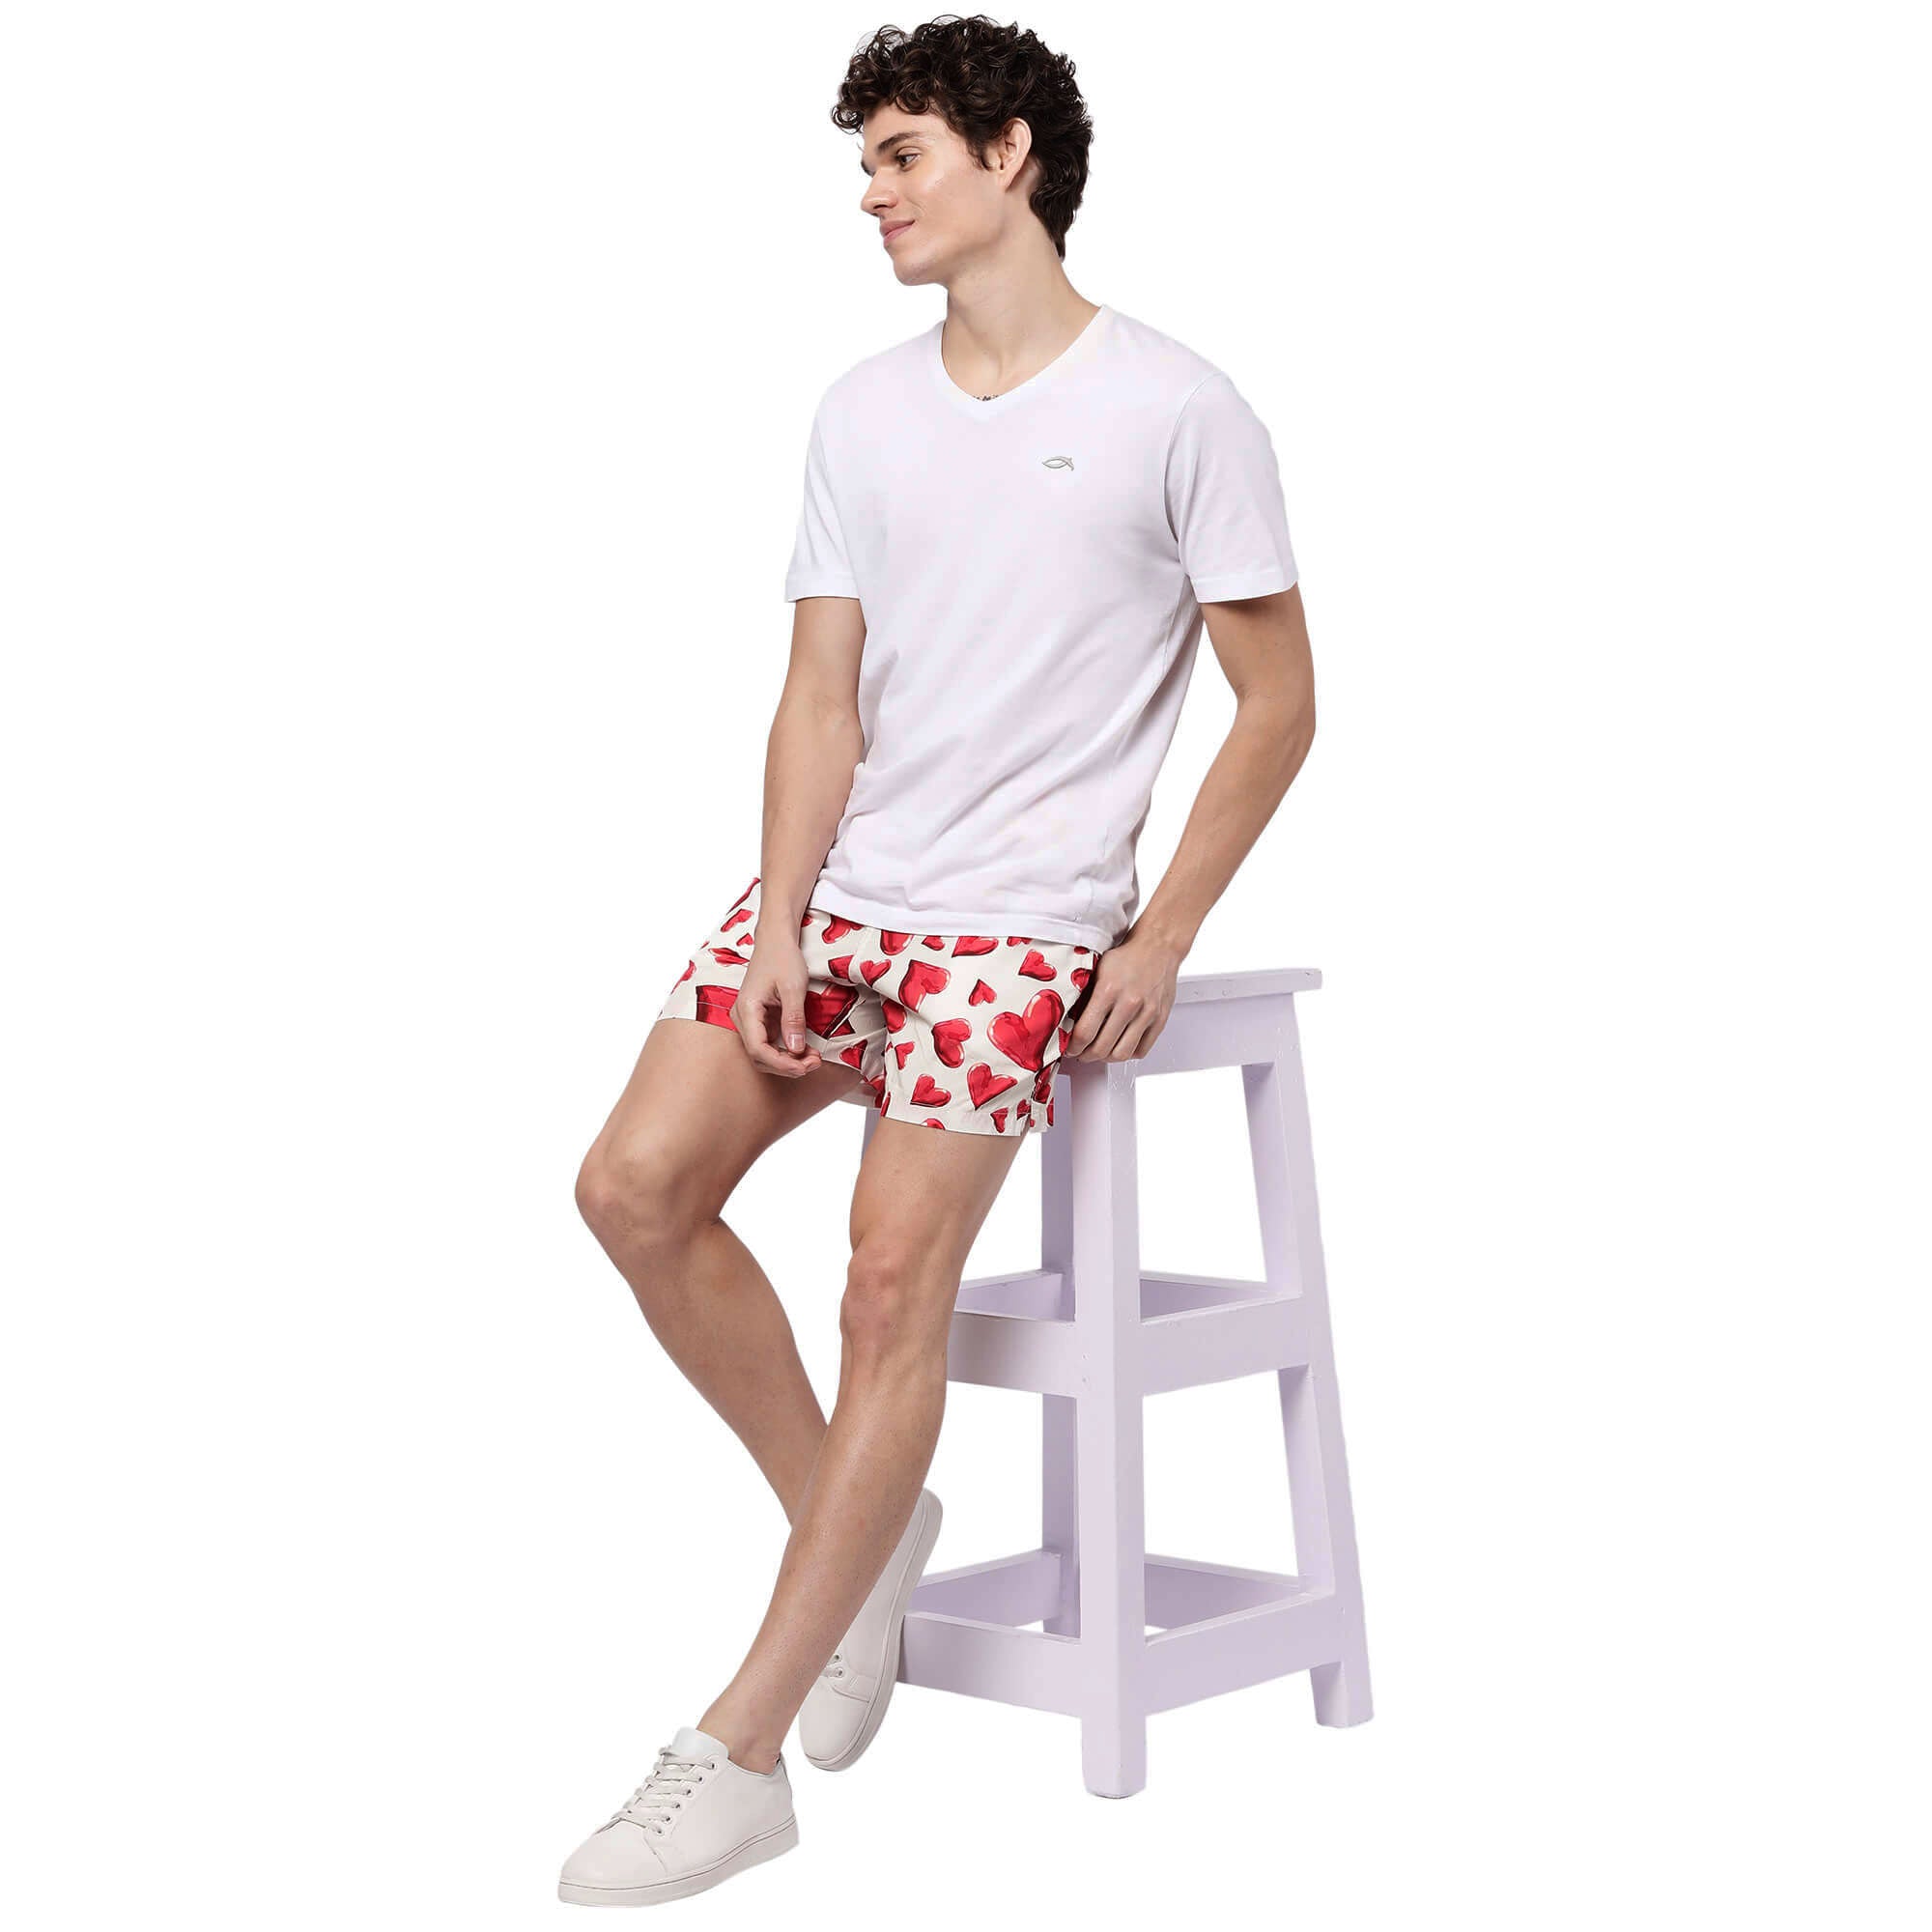 Printed Shorts for Men